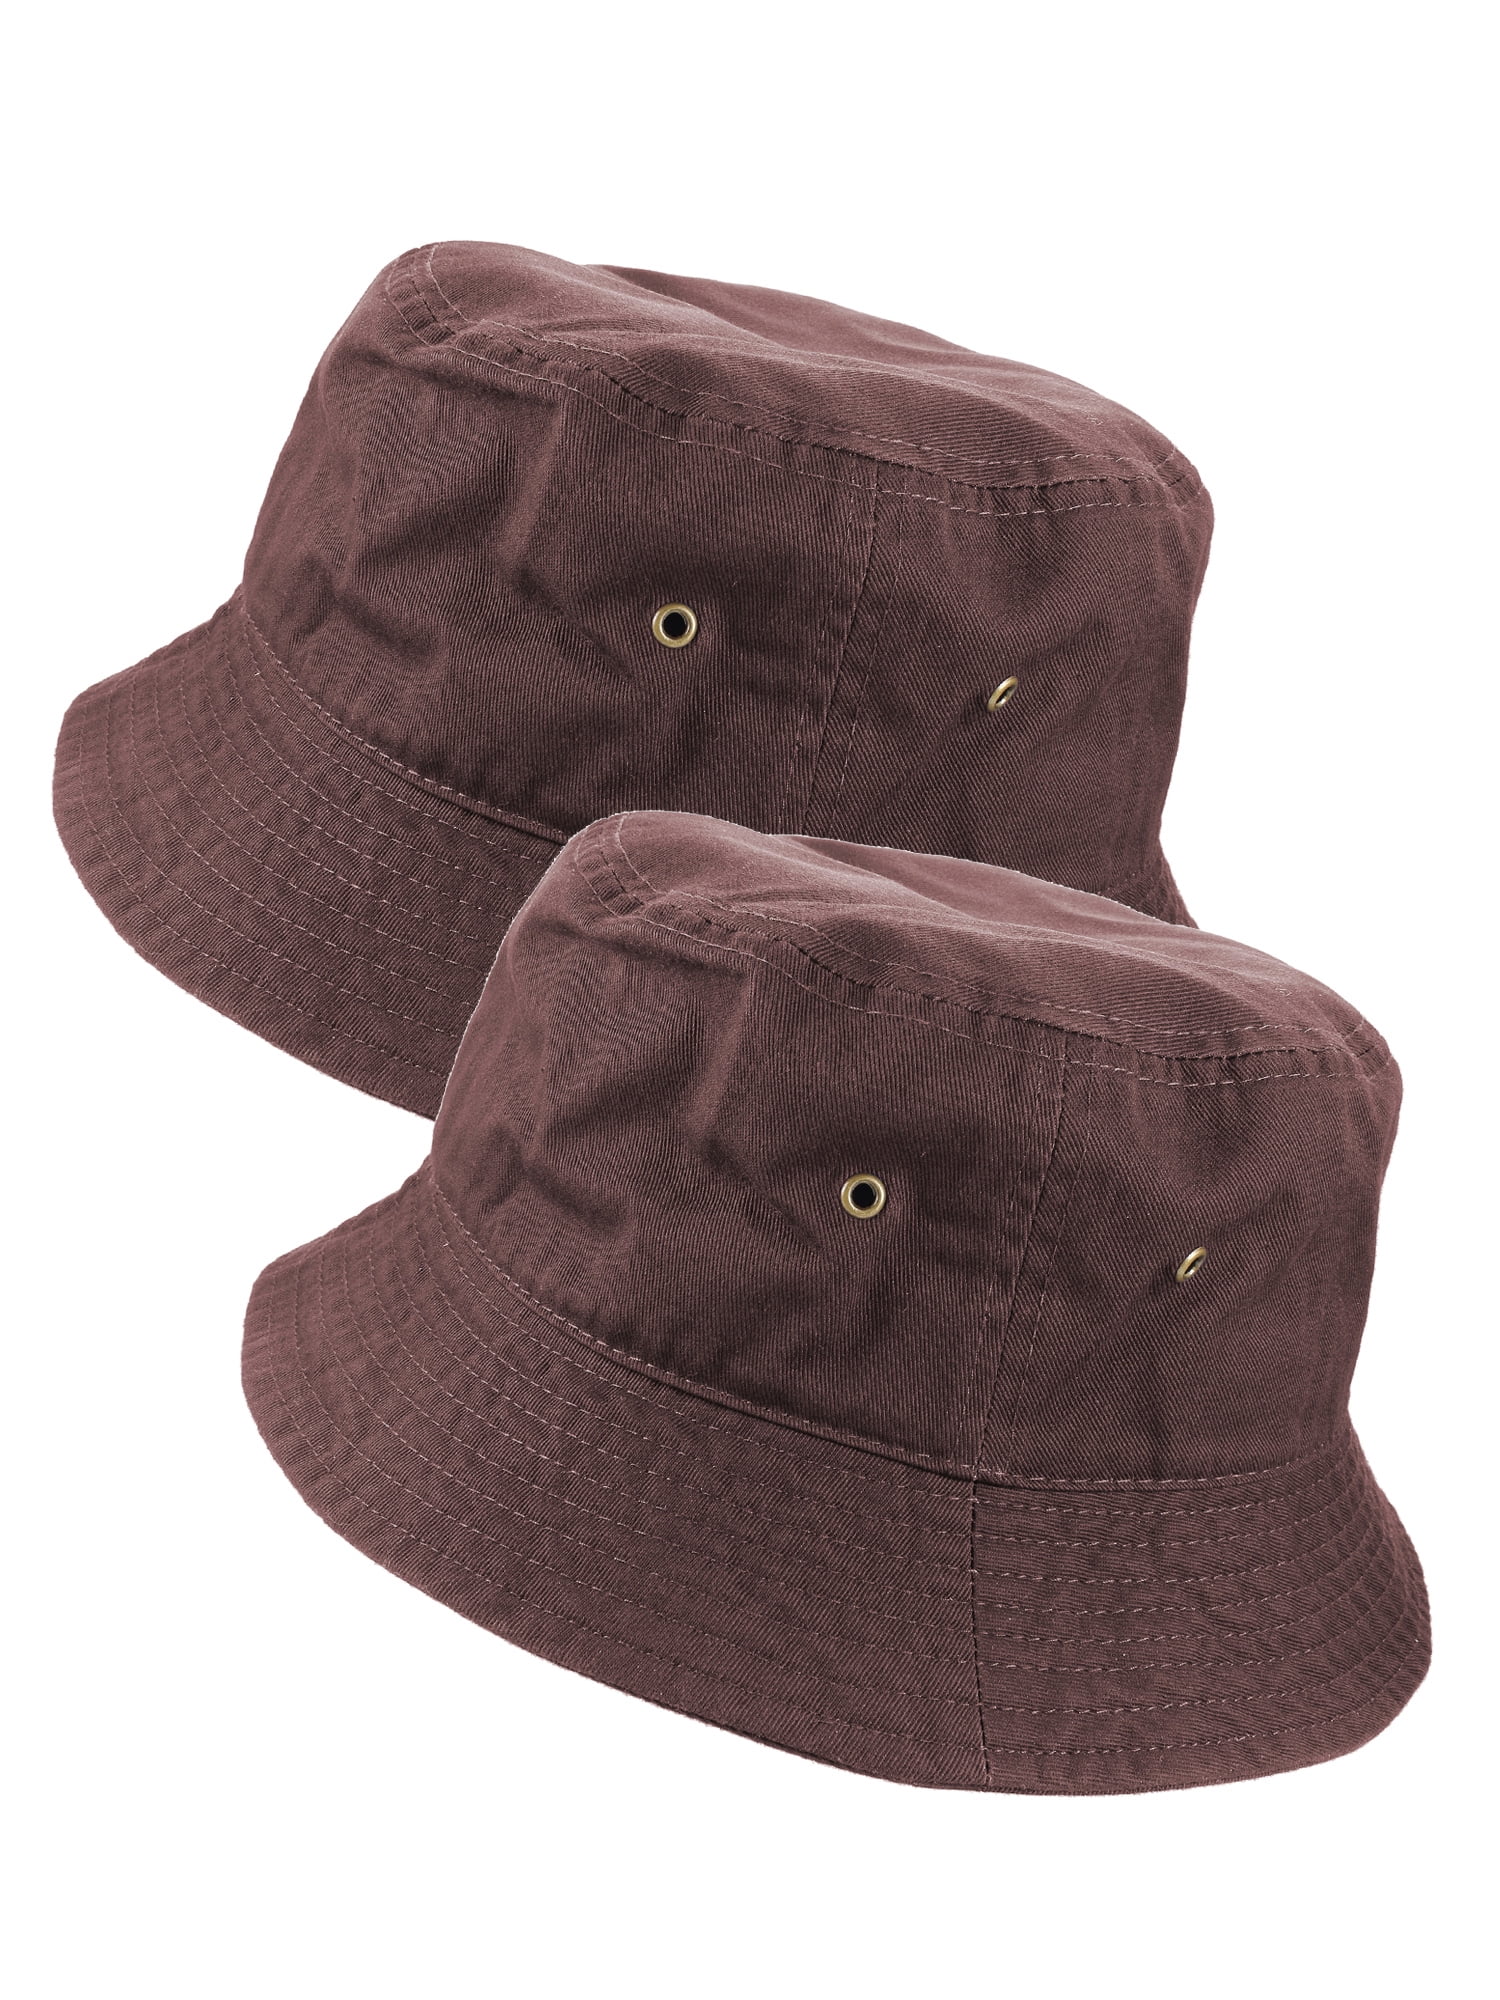 Flat Earth Society Unisex Cotton Packable Black Travel Bucket Hat Fishing Cap 